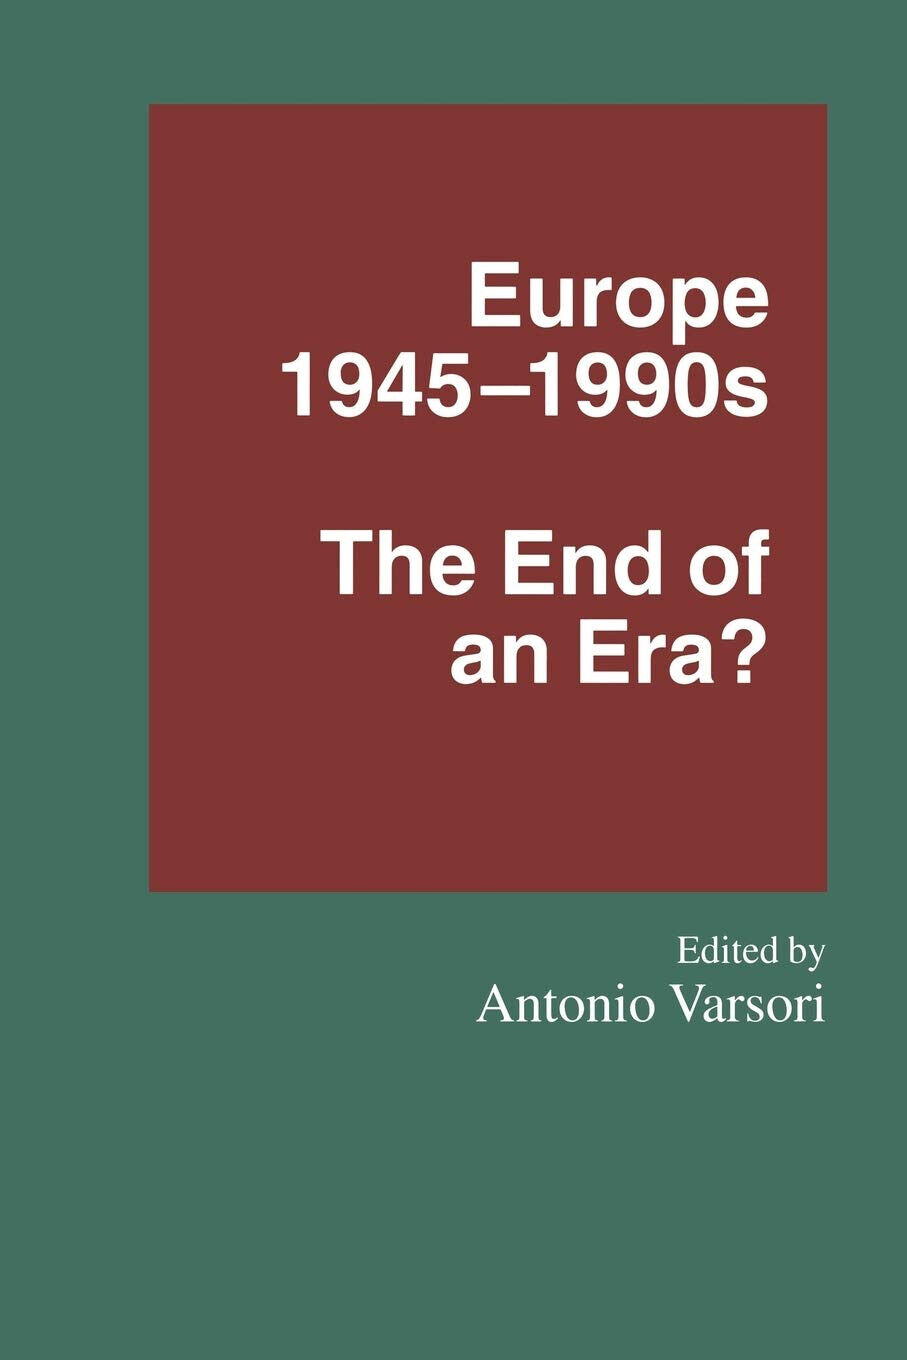 Europe 1945-1990s - Antonio Varsori - Palgrave , 1995